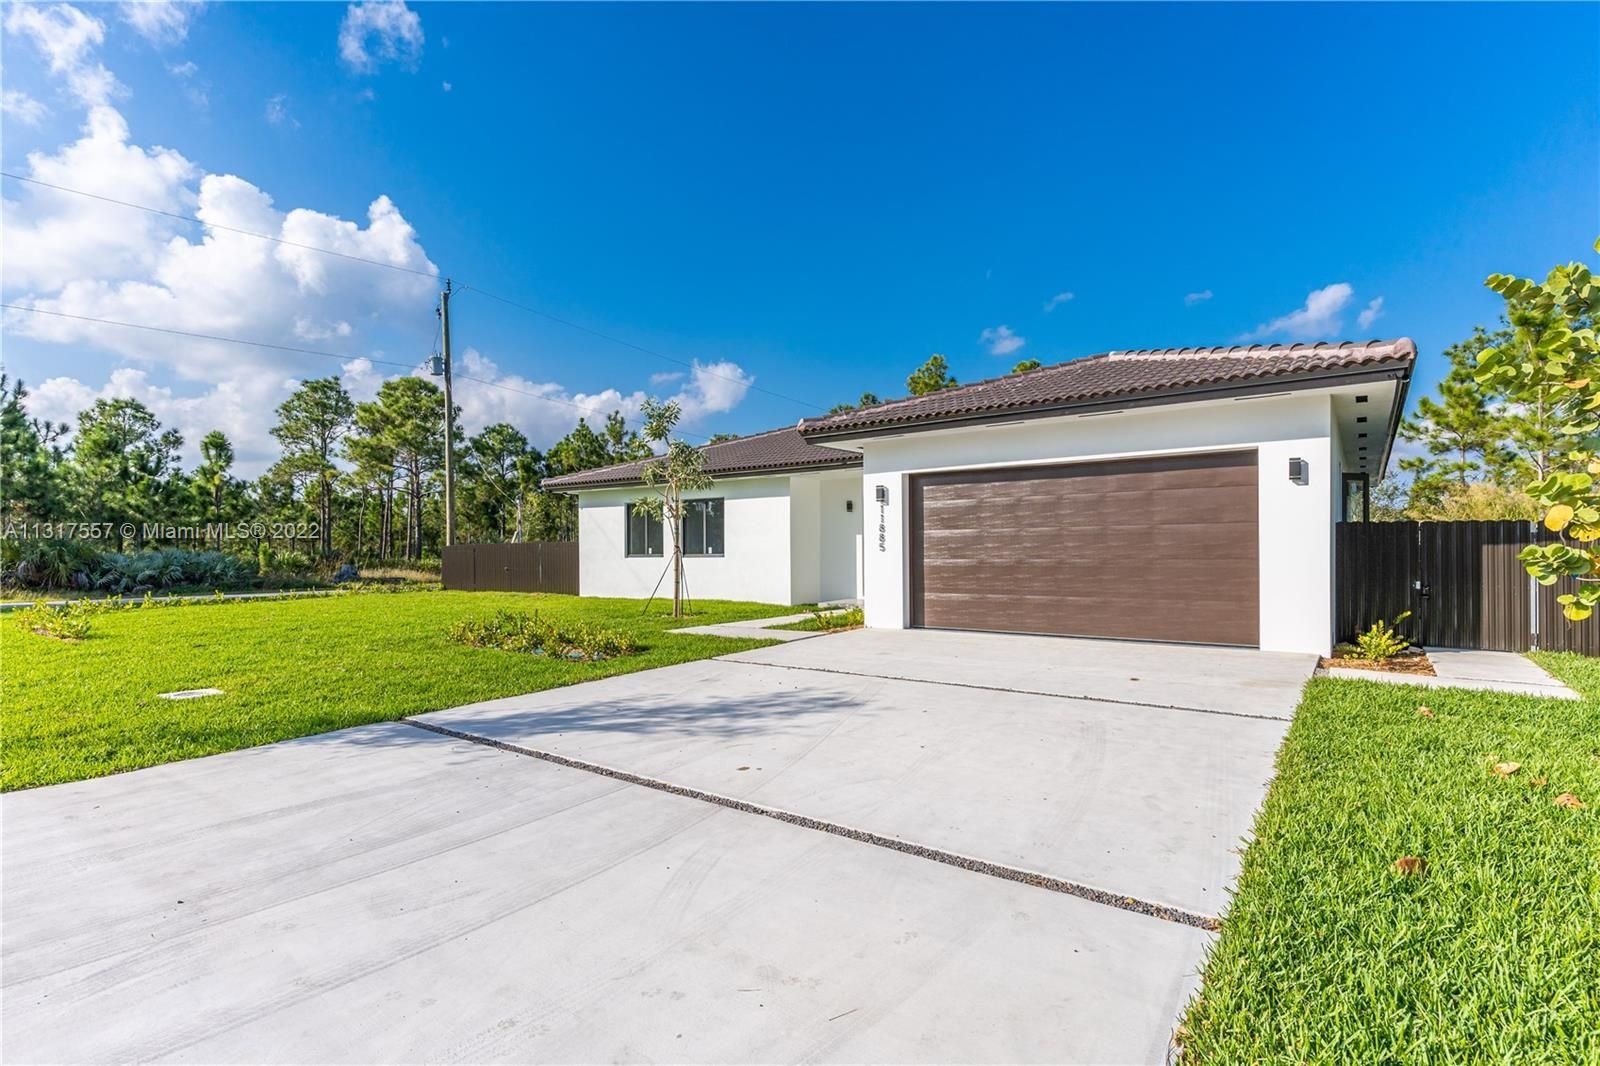 Real estate property located at 11885 226 Ter, Miami-Dade County, Miami, FL